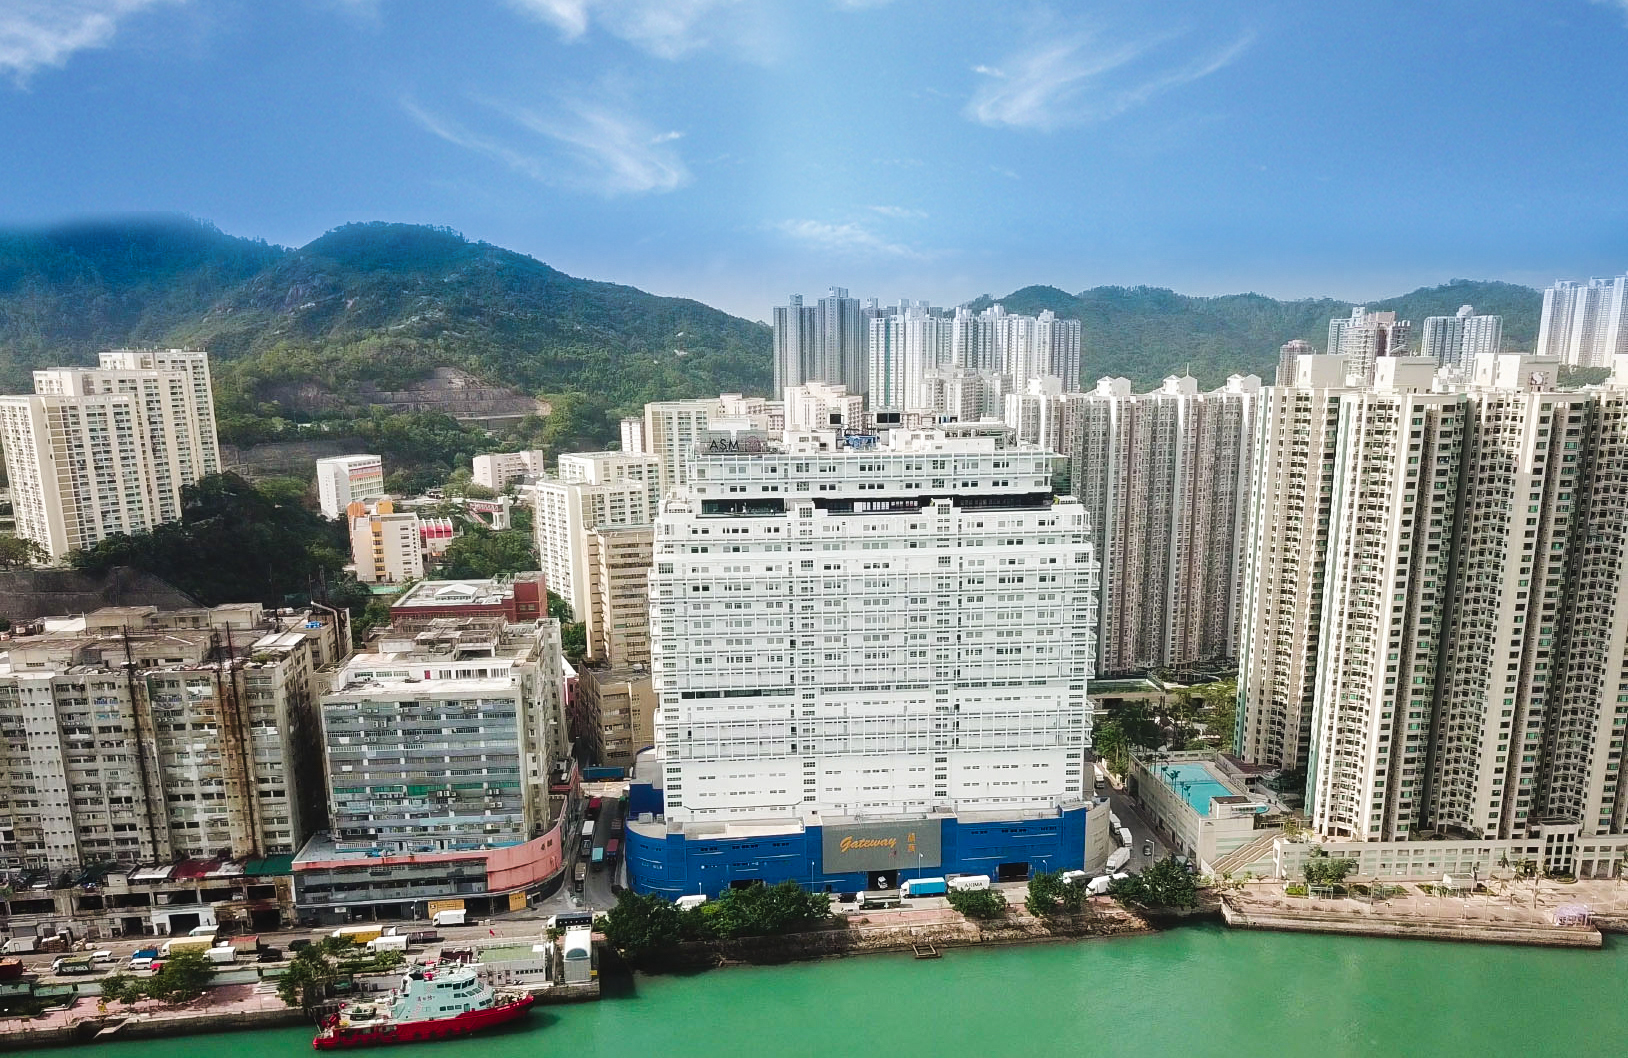 ASM Pacific Technology Celebrates Opening Of New Hong Kong Office At Tsing Yi